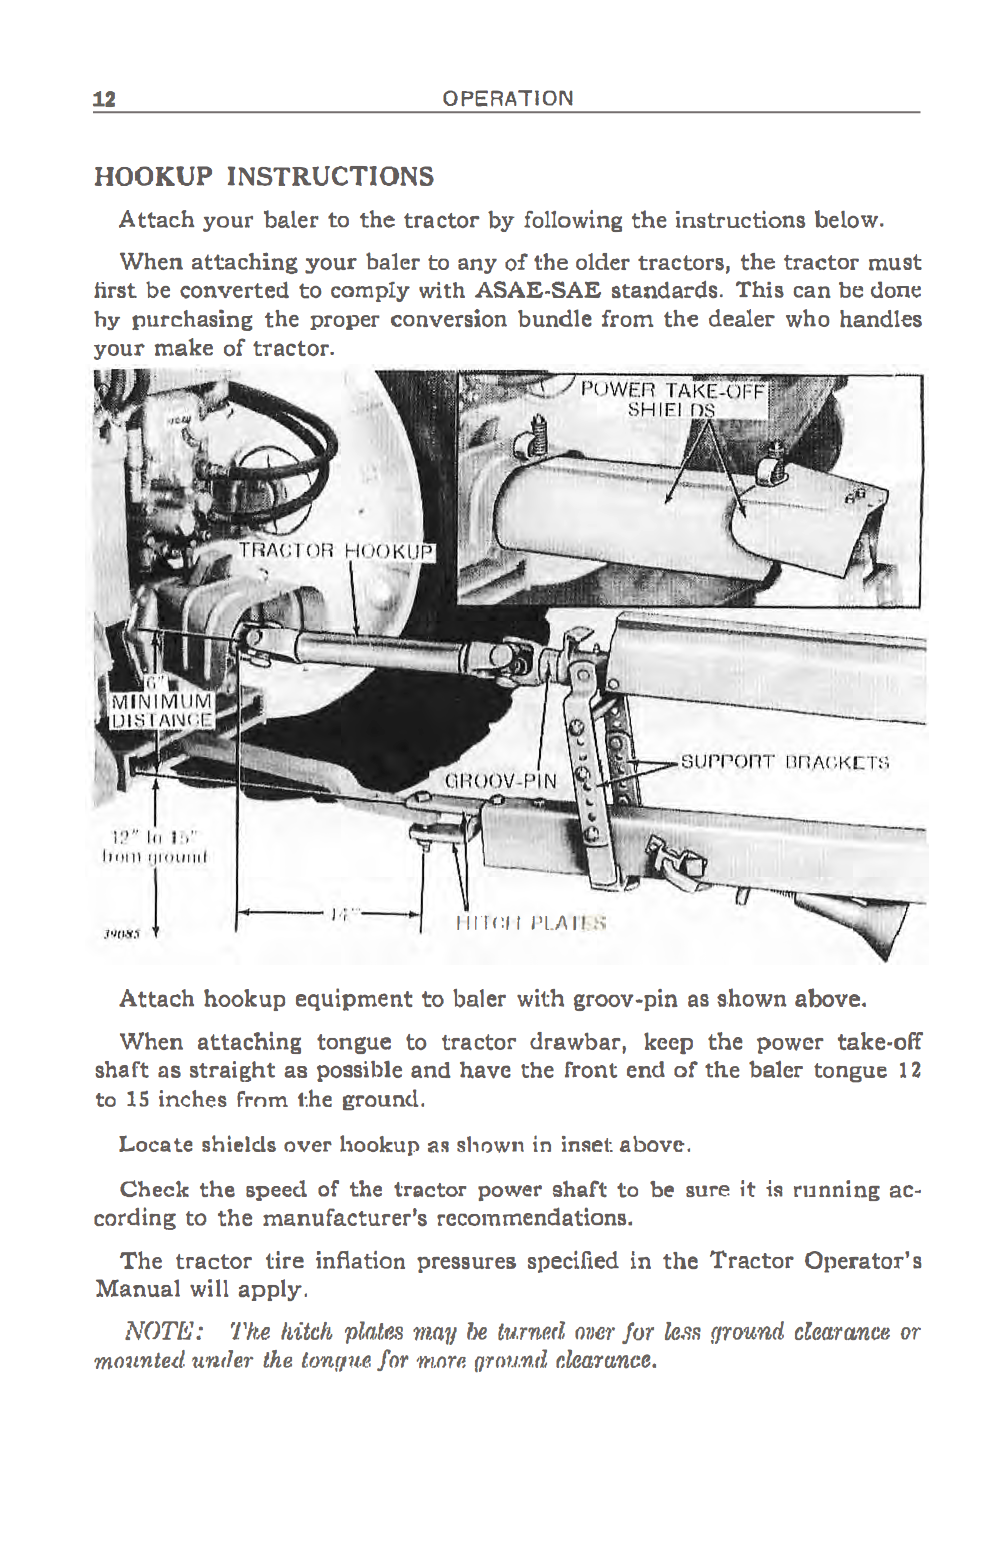 John Deere No. 14T Automatic Pickup Baler - Operator's Manual - Ag Manuals - A Provider of Digital Farm Manuals - 4